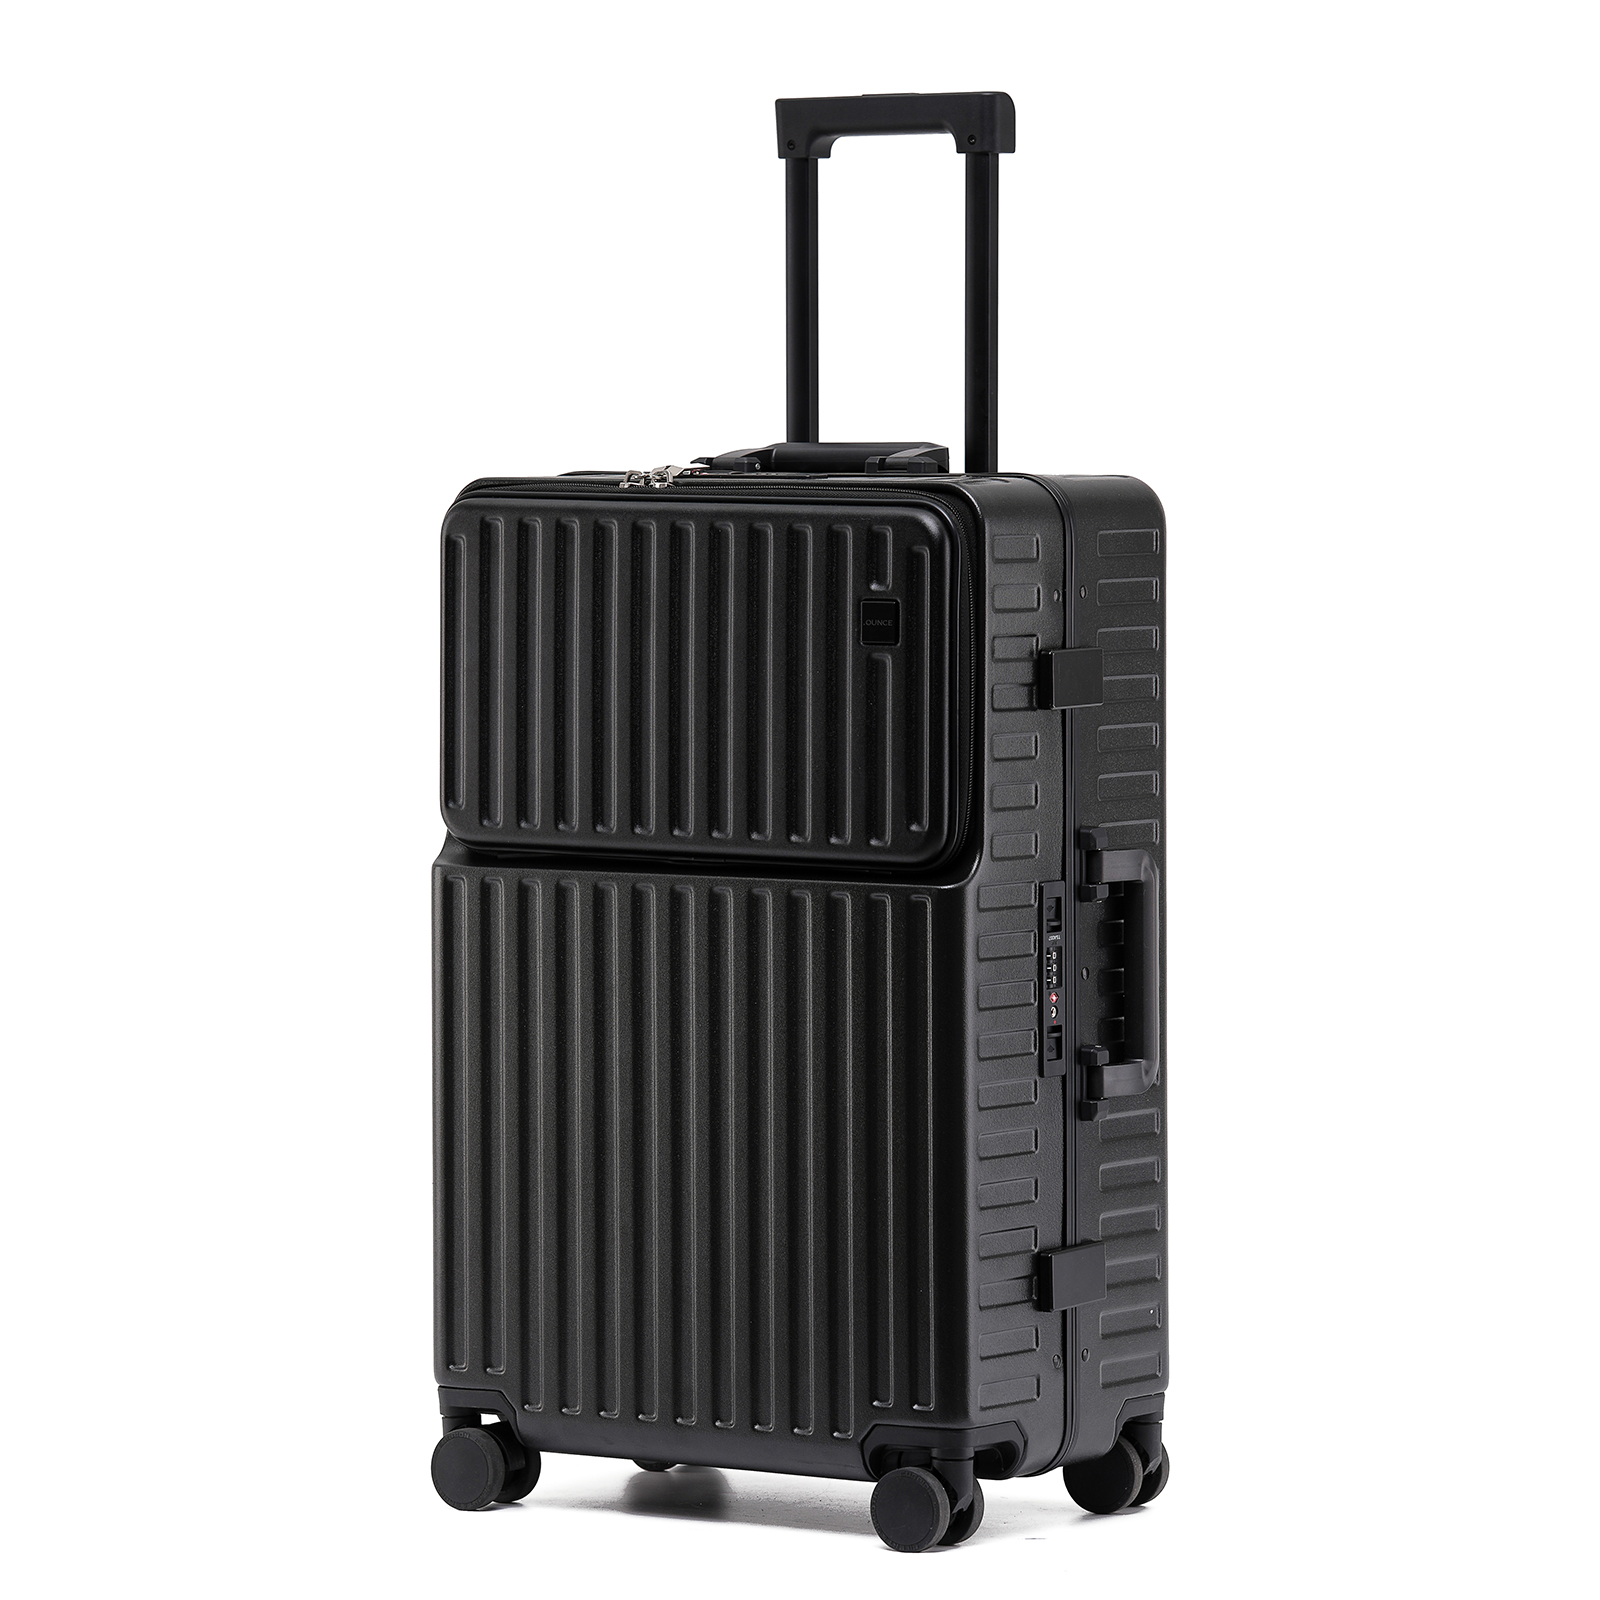 STYLISHJAPAN 公式 スーツケース Sサイズ オール アルミ合金 ボディ